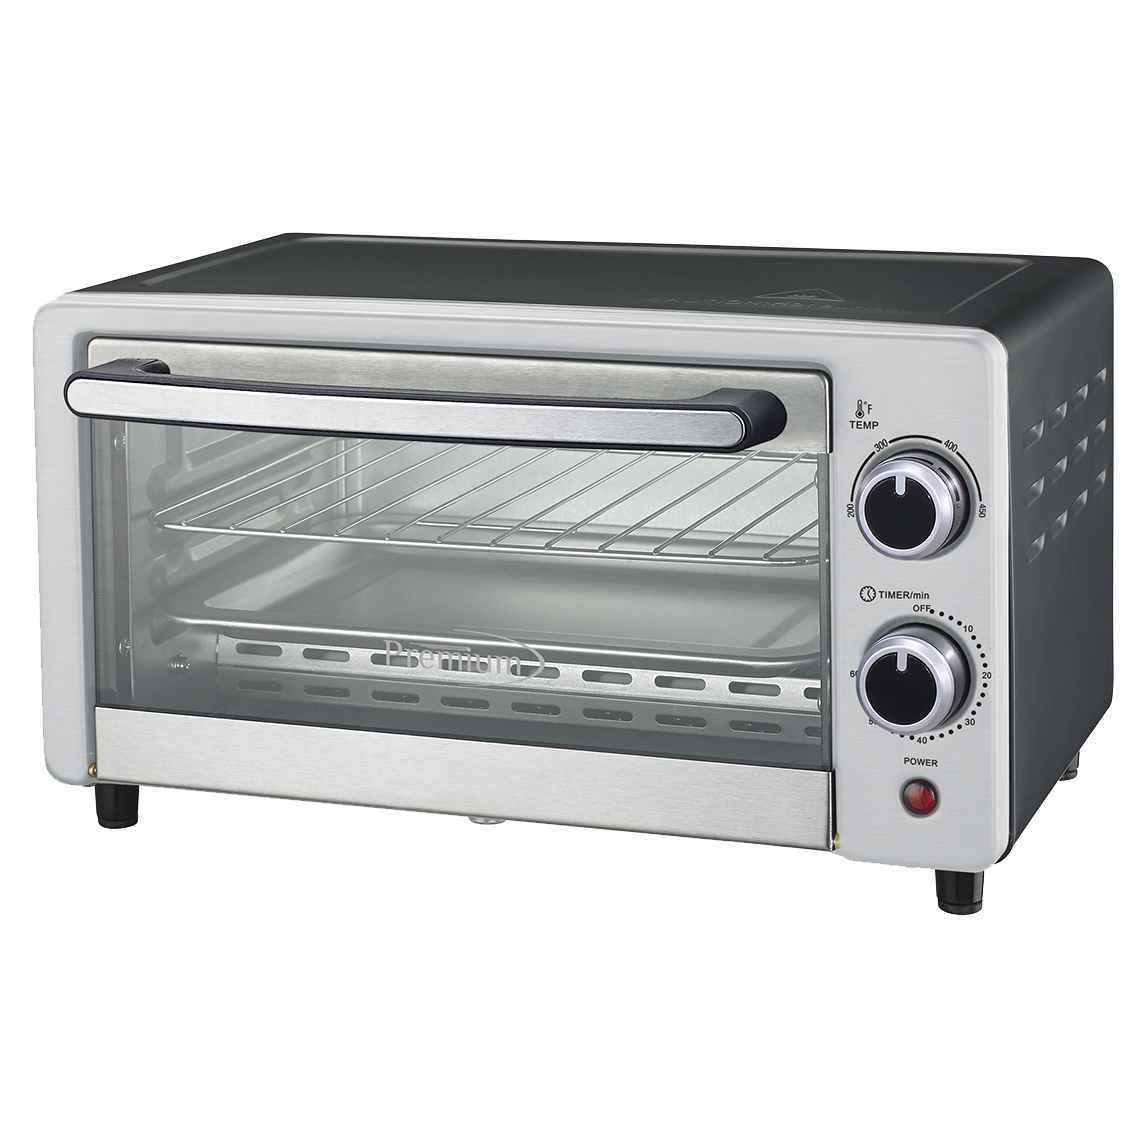 Premium 4-Slice Toaster Broil Oven 8" Pizza Bake. Elegad Silver